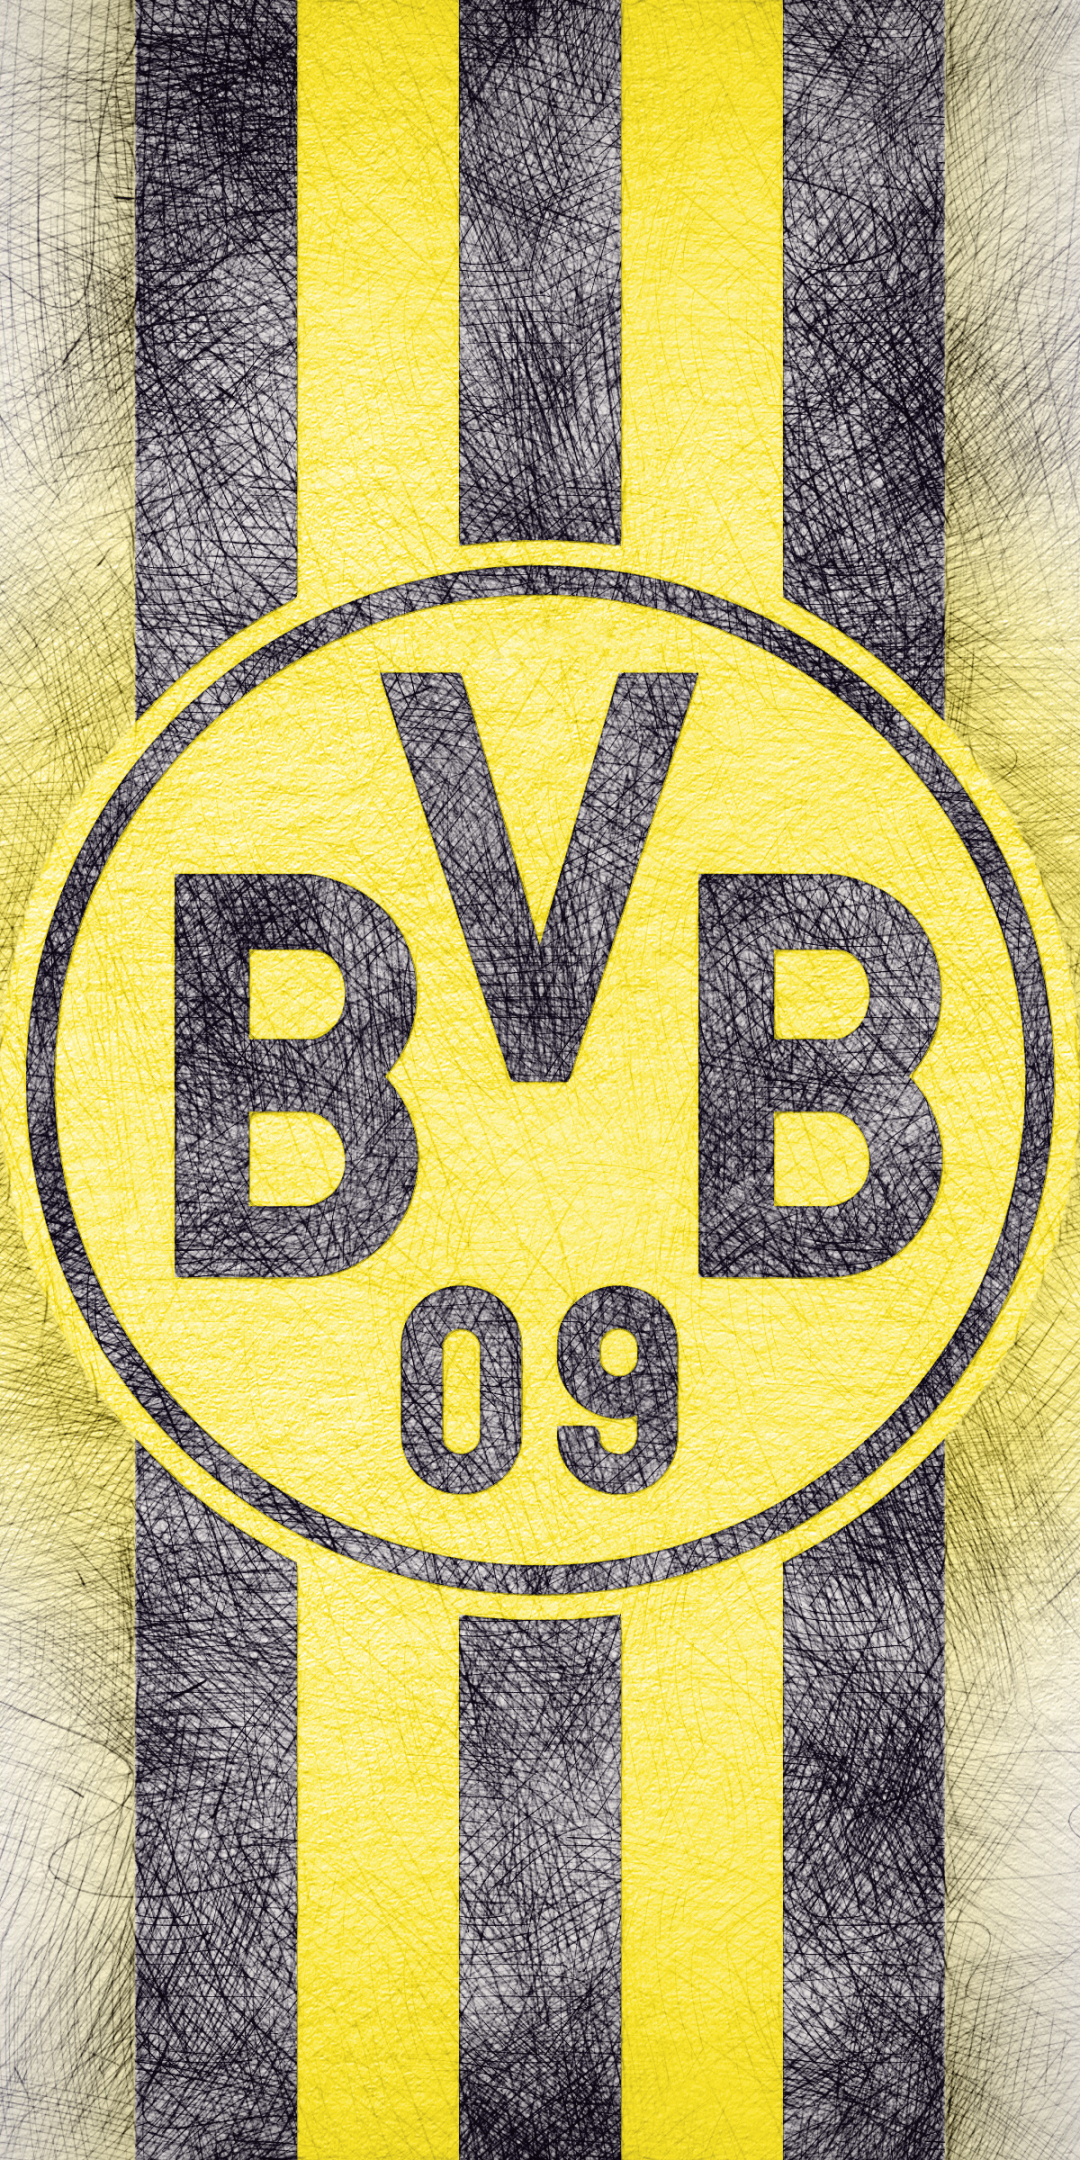 Handy-Wallpaper Sport, Fußball, Logo, Emblem, Bvb, Borussia Dortmund kostenlos herunterladen.